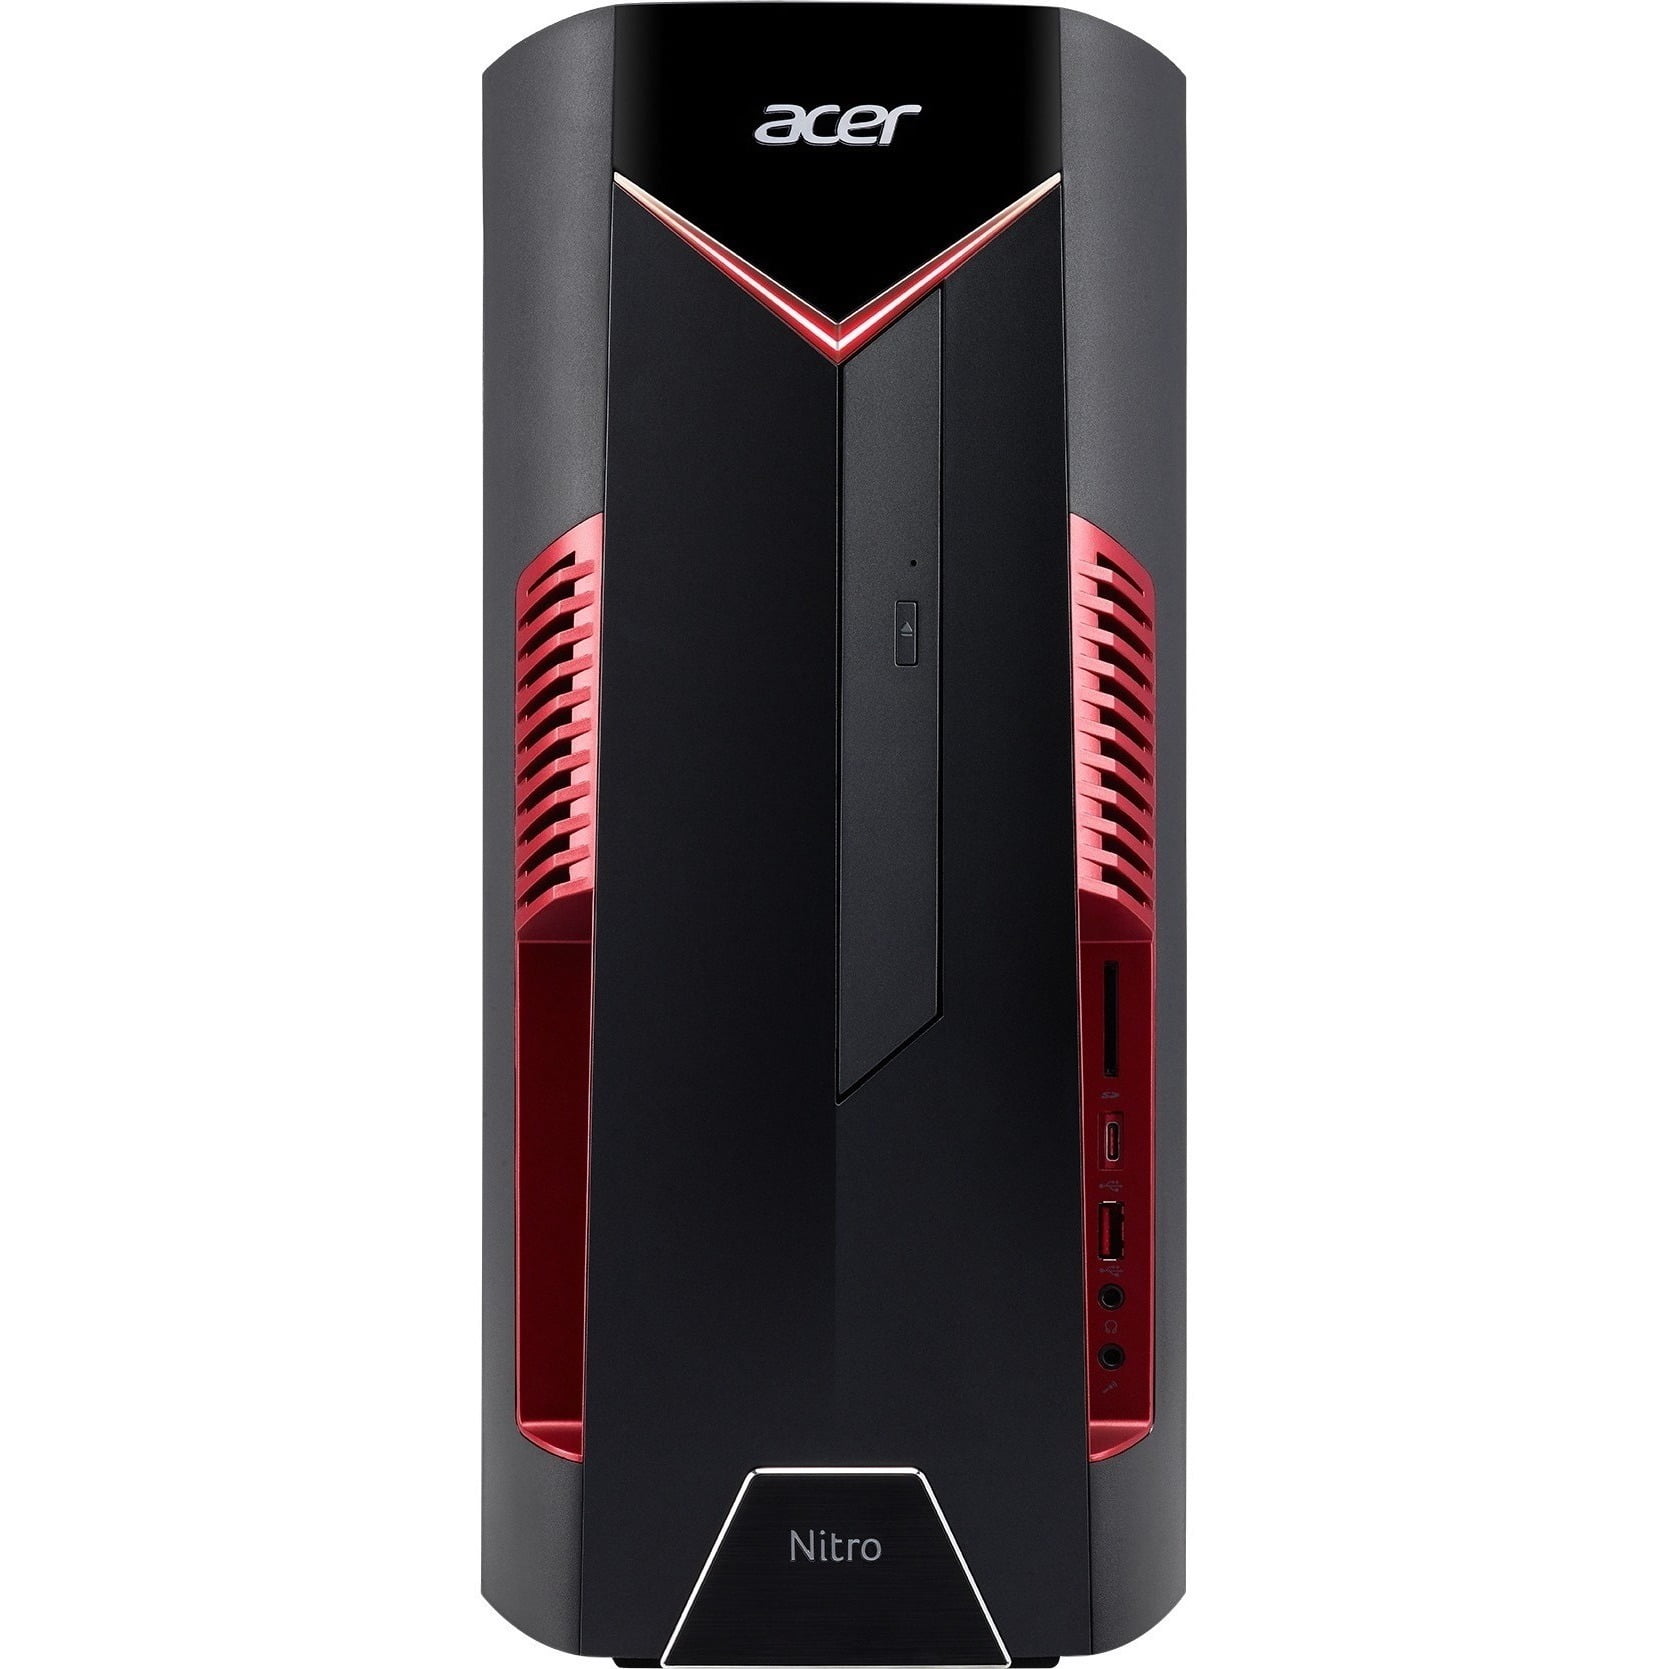 Acer Nitro N50-600 Gaming Desktop Computer - Core i5-9400F - 8GB